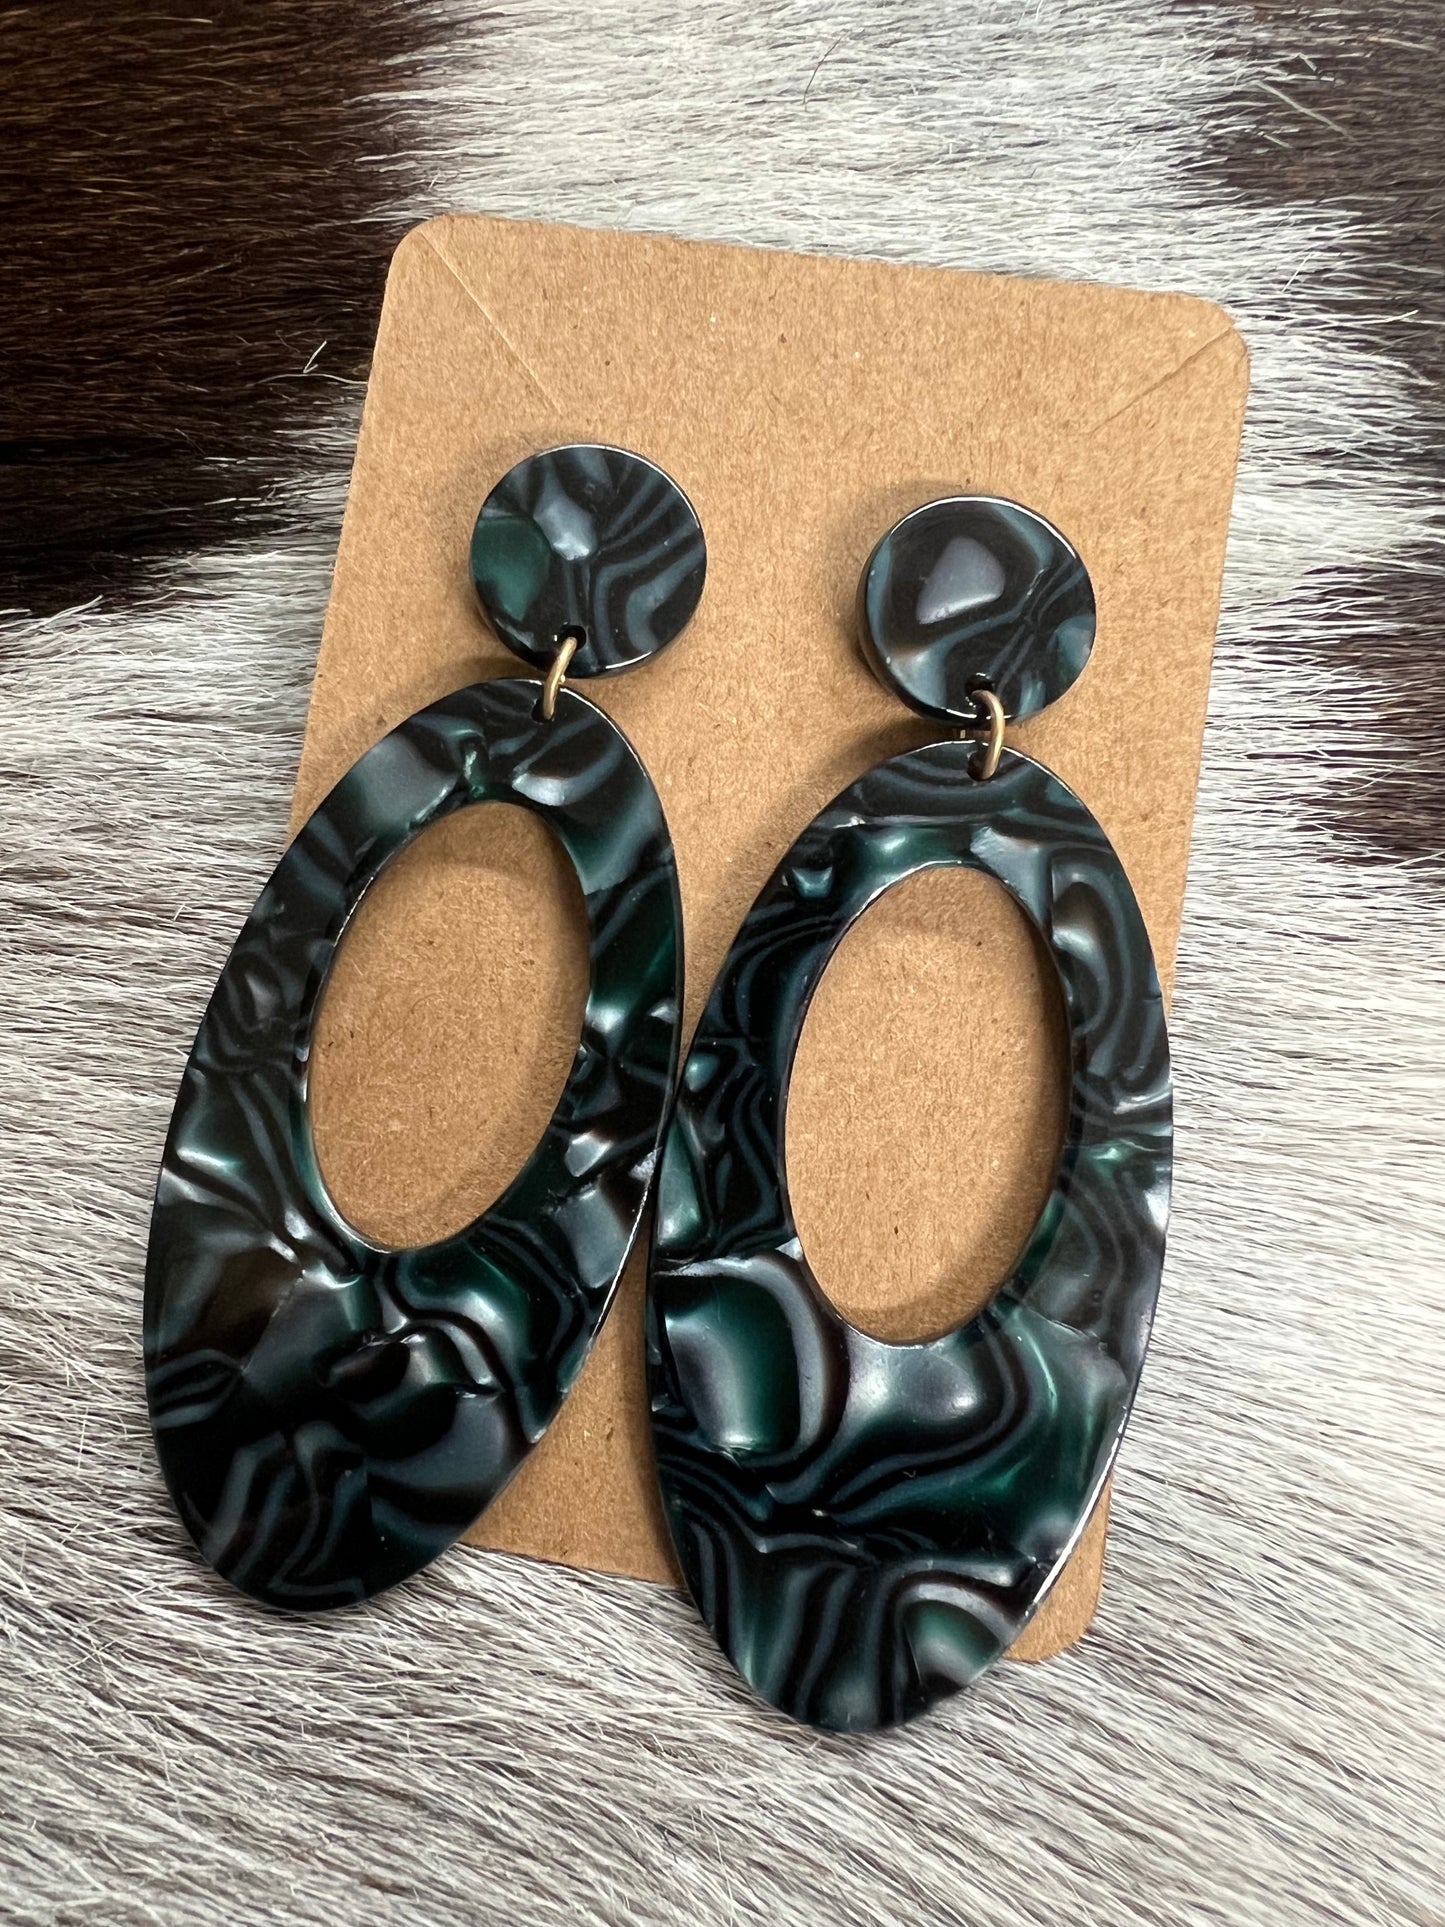 The Emerald Marble Earrings